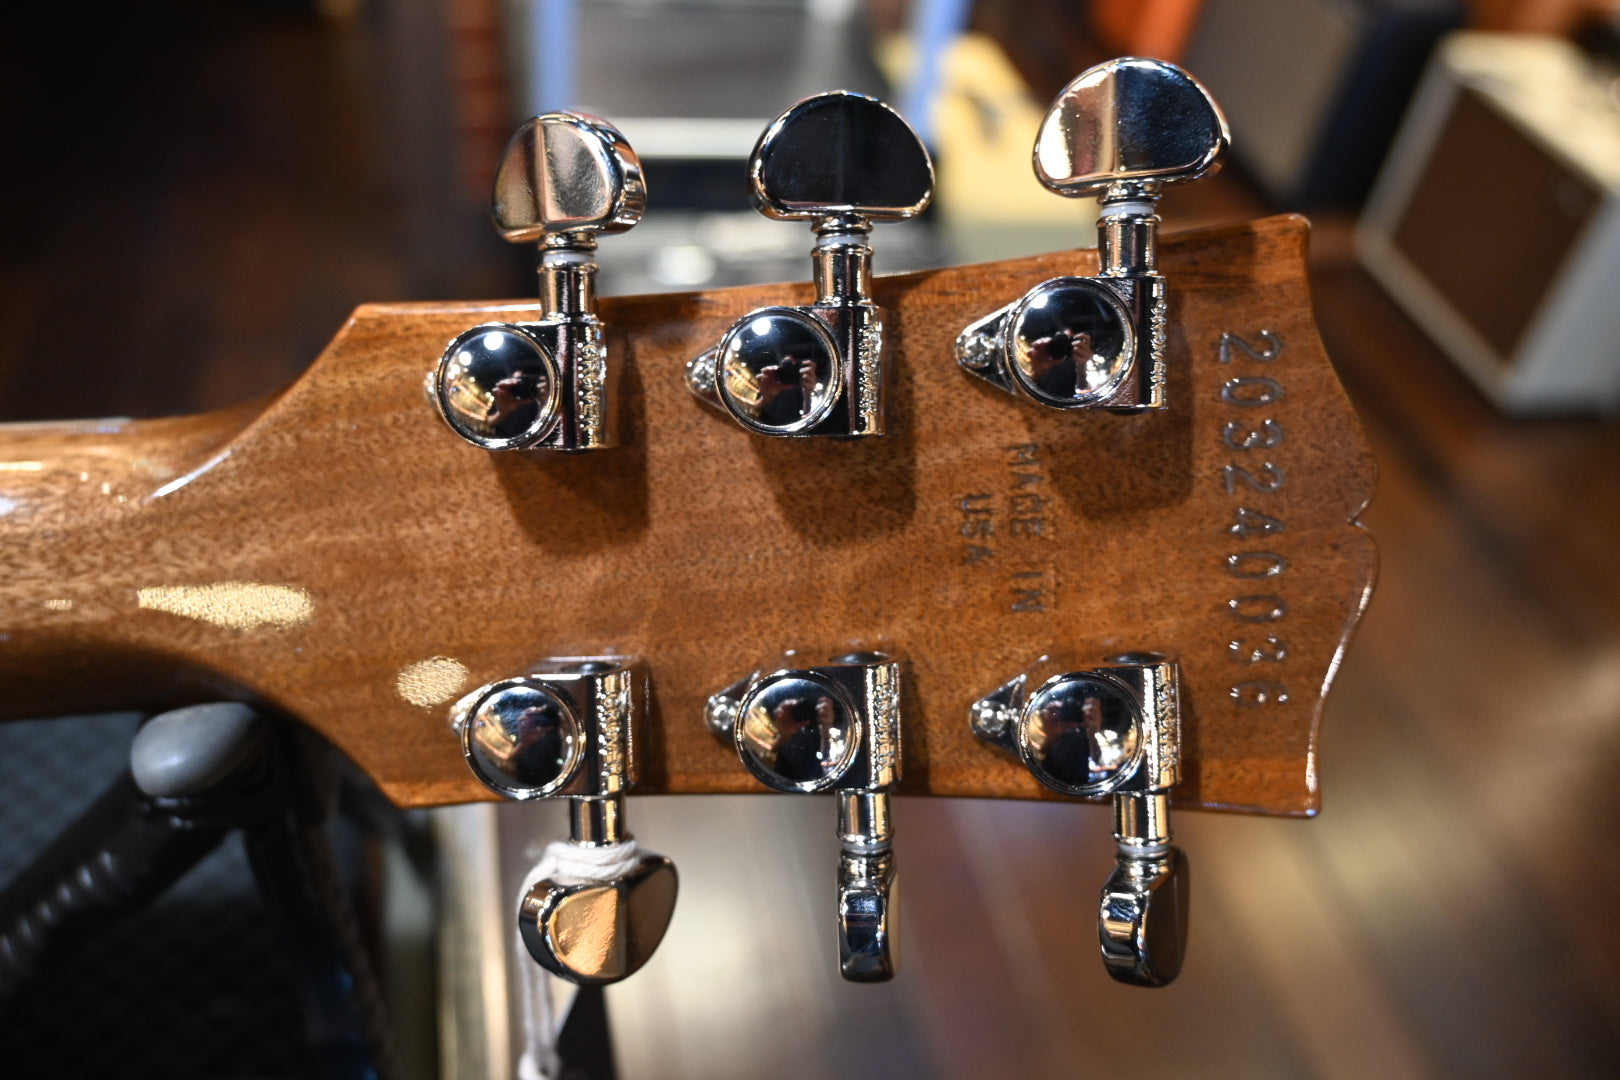 Gibson Les Paul Standard ‘60s Figured Top - Honey Amber Guitar #0036 - Danville Music